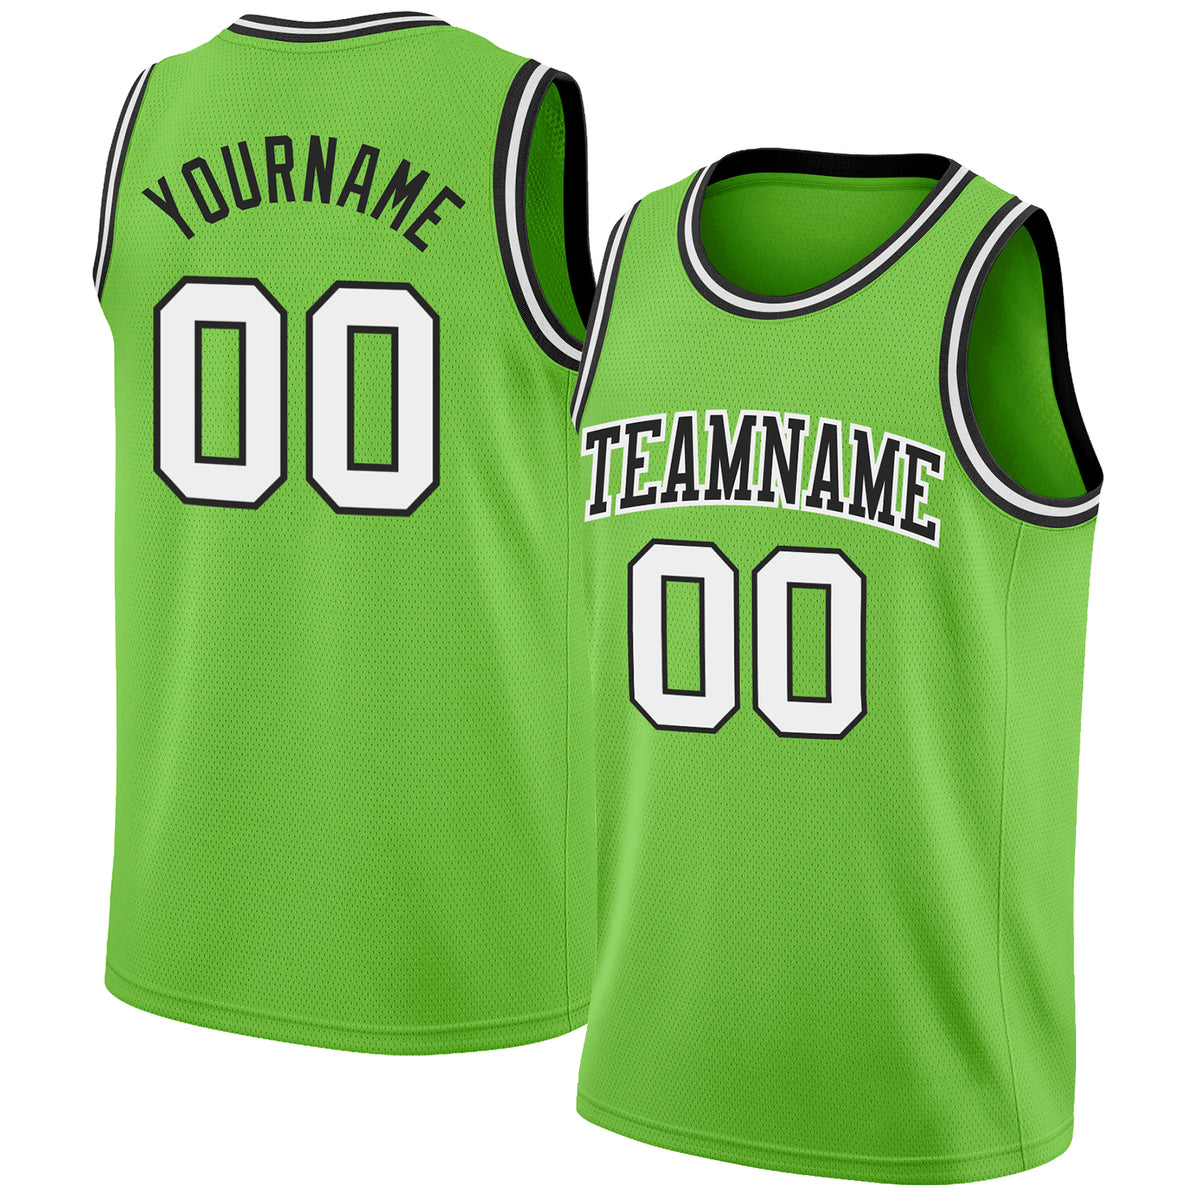 FIITG Custom Basketball Jersey Black Neon Green-White Authentic Throwback Men's Size:3XL